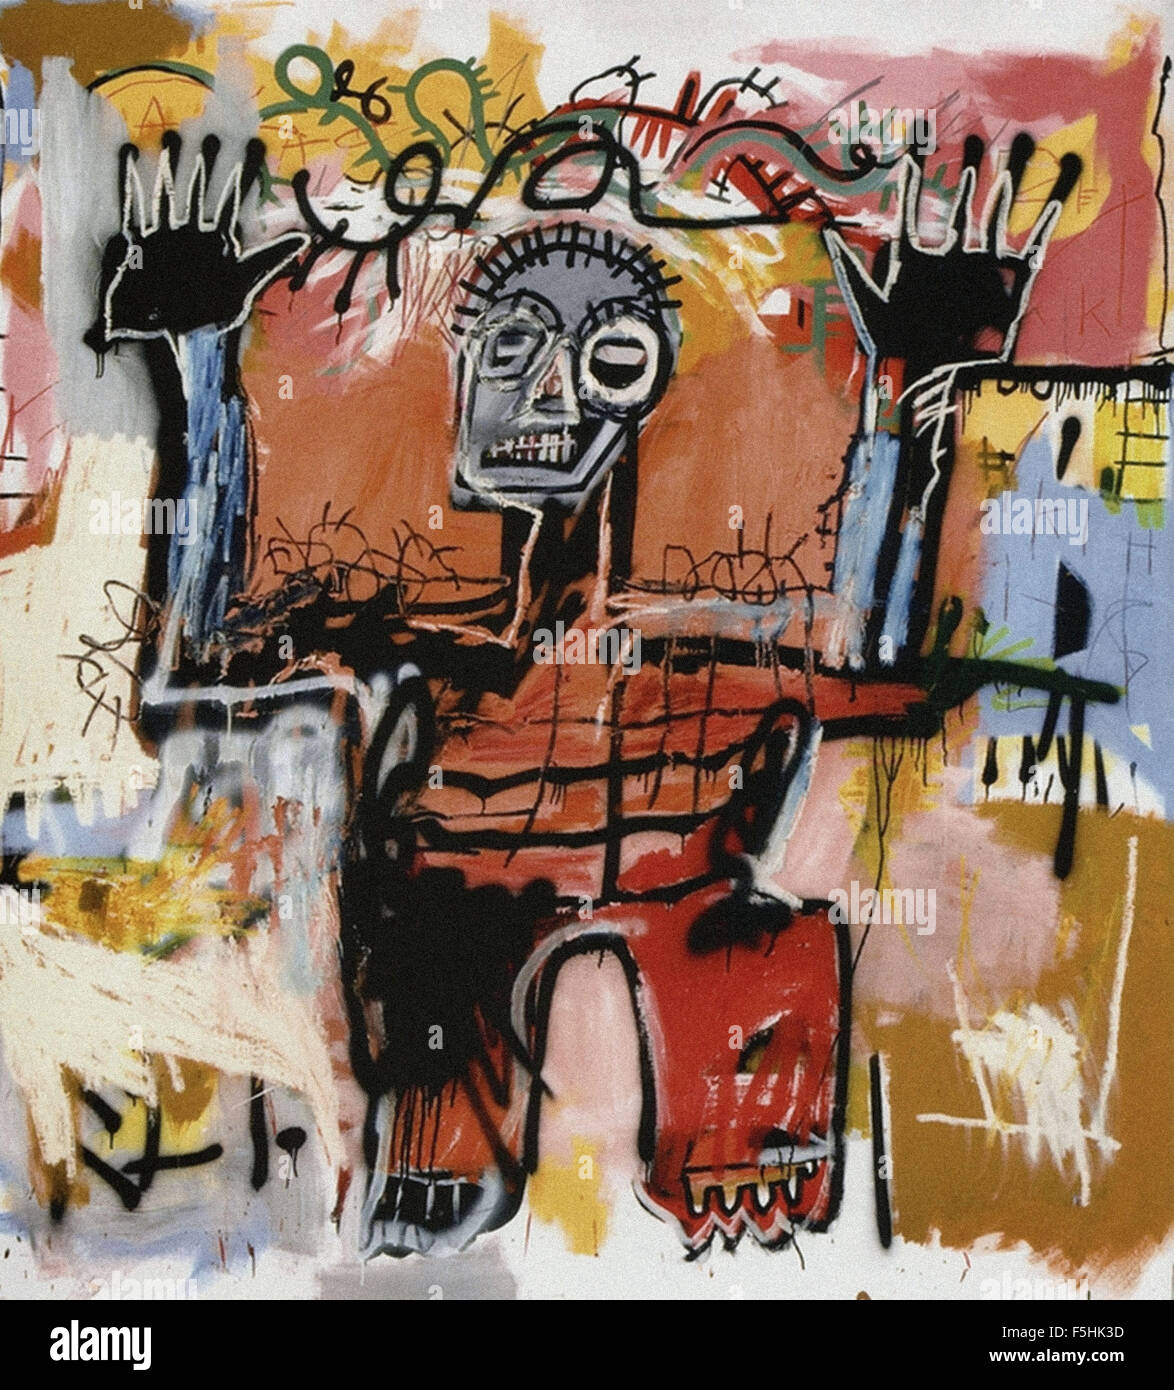 Jean Michel Basquiat - Untitled Stock Photo - Alamy